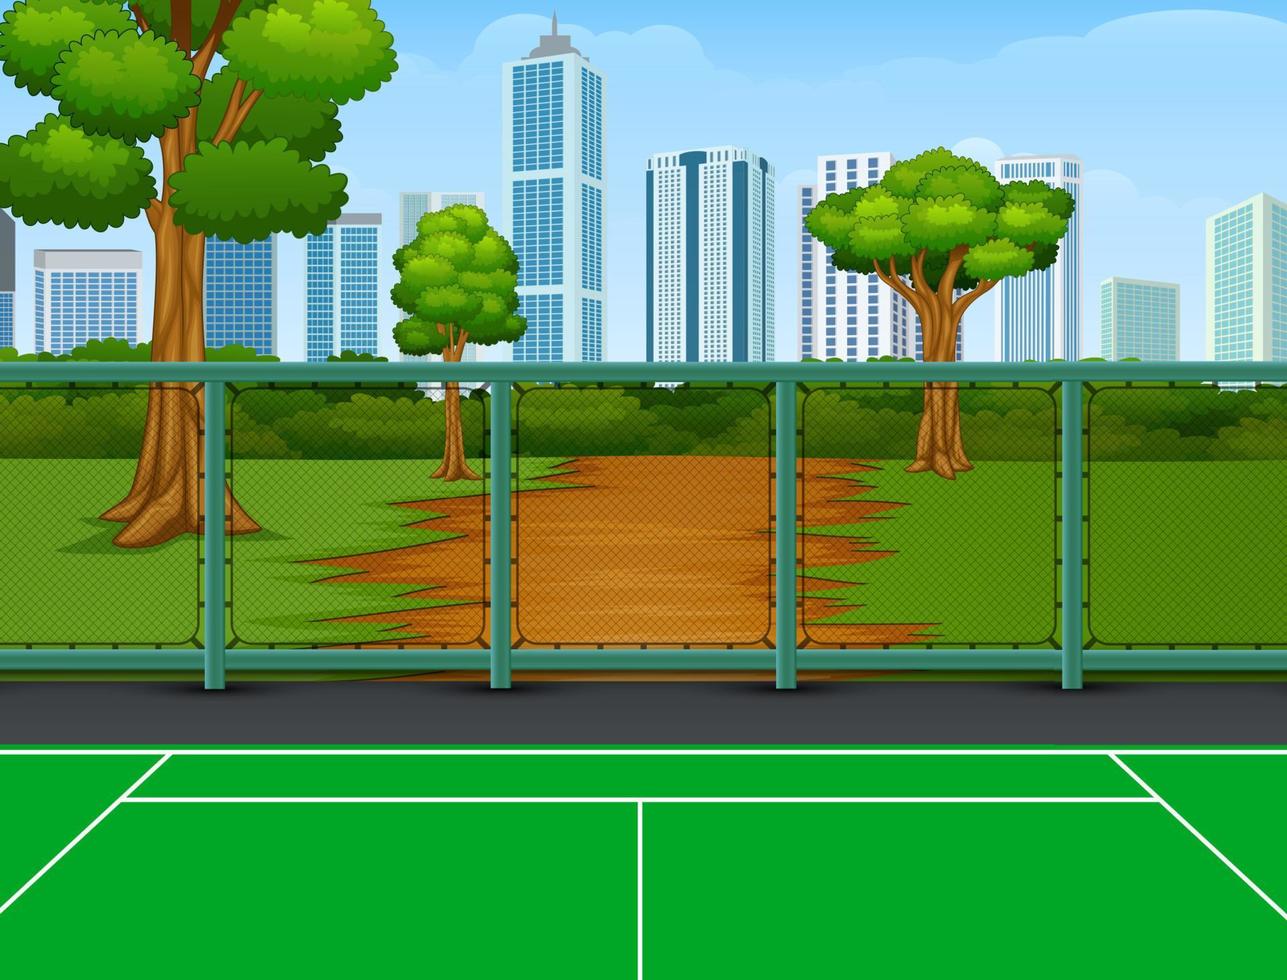 tennisbana i parken med stadsbakgrund vektor